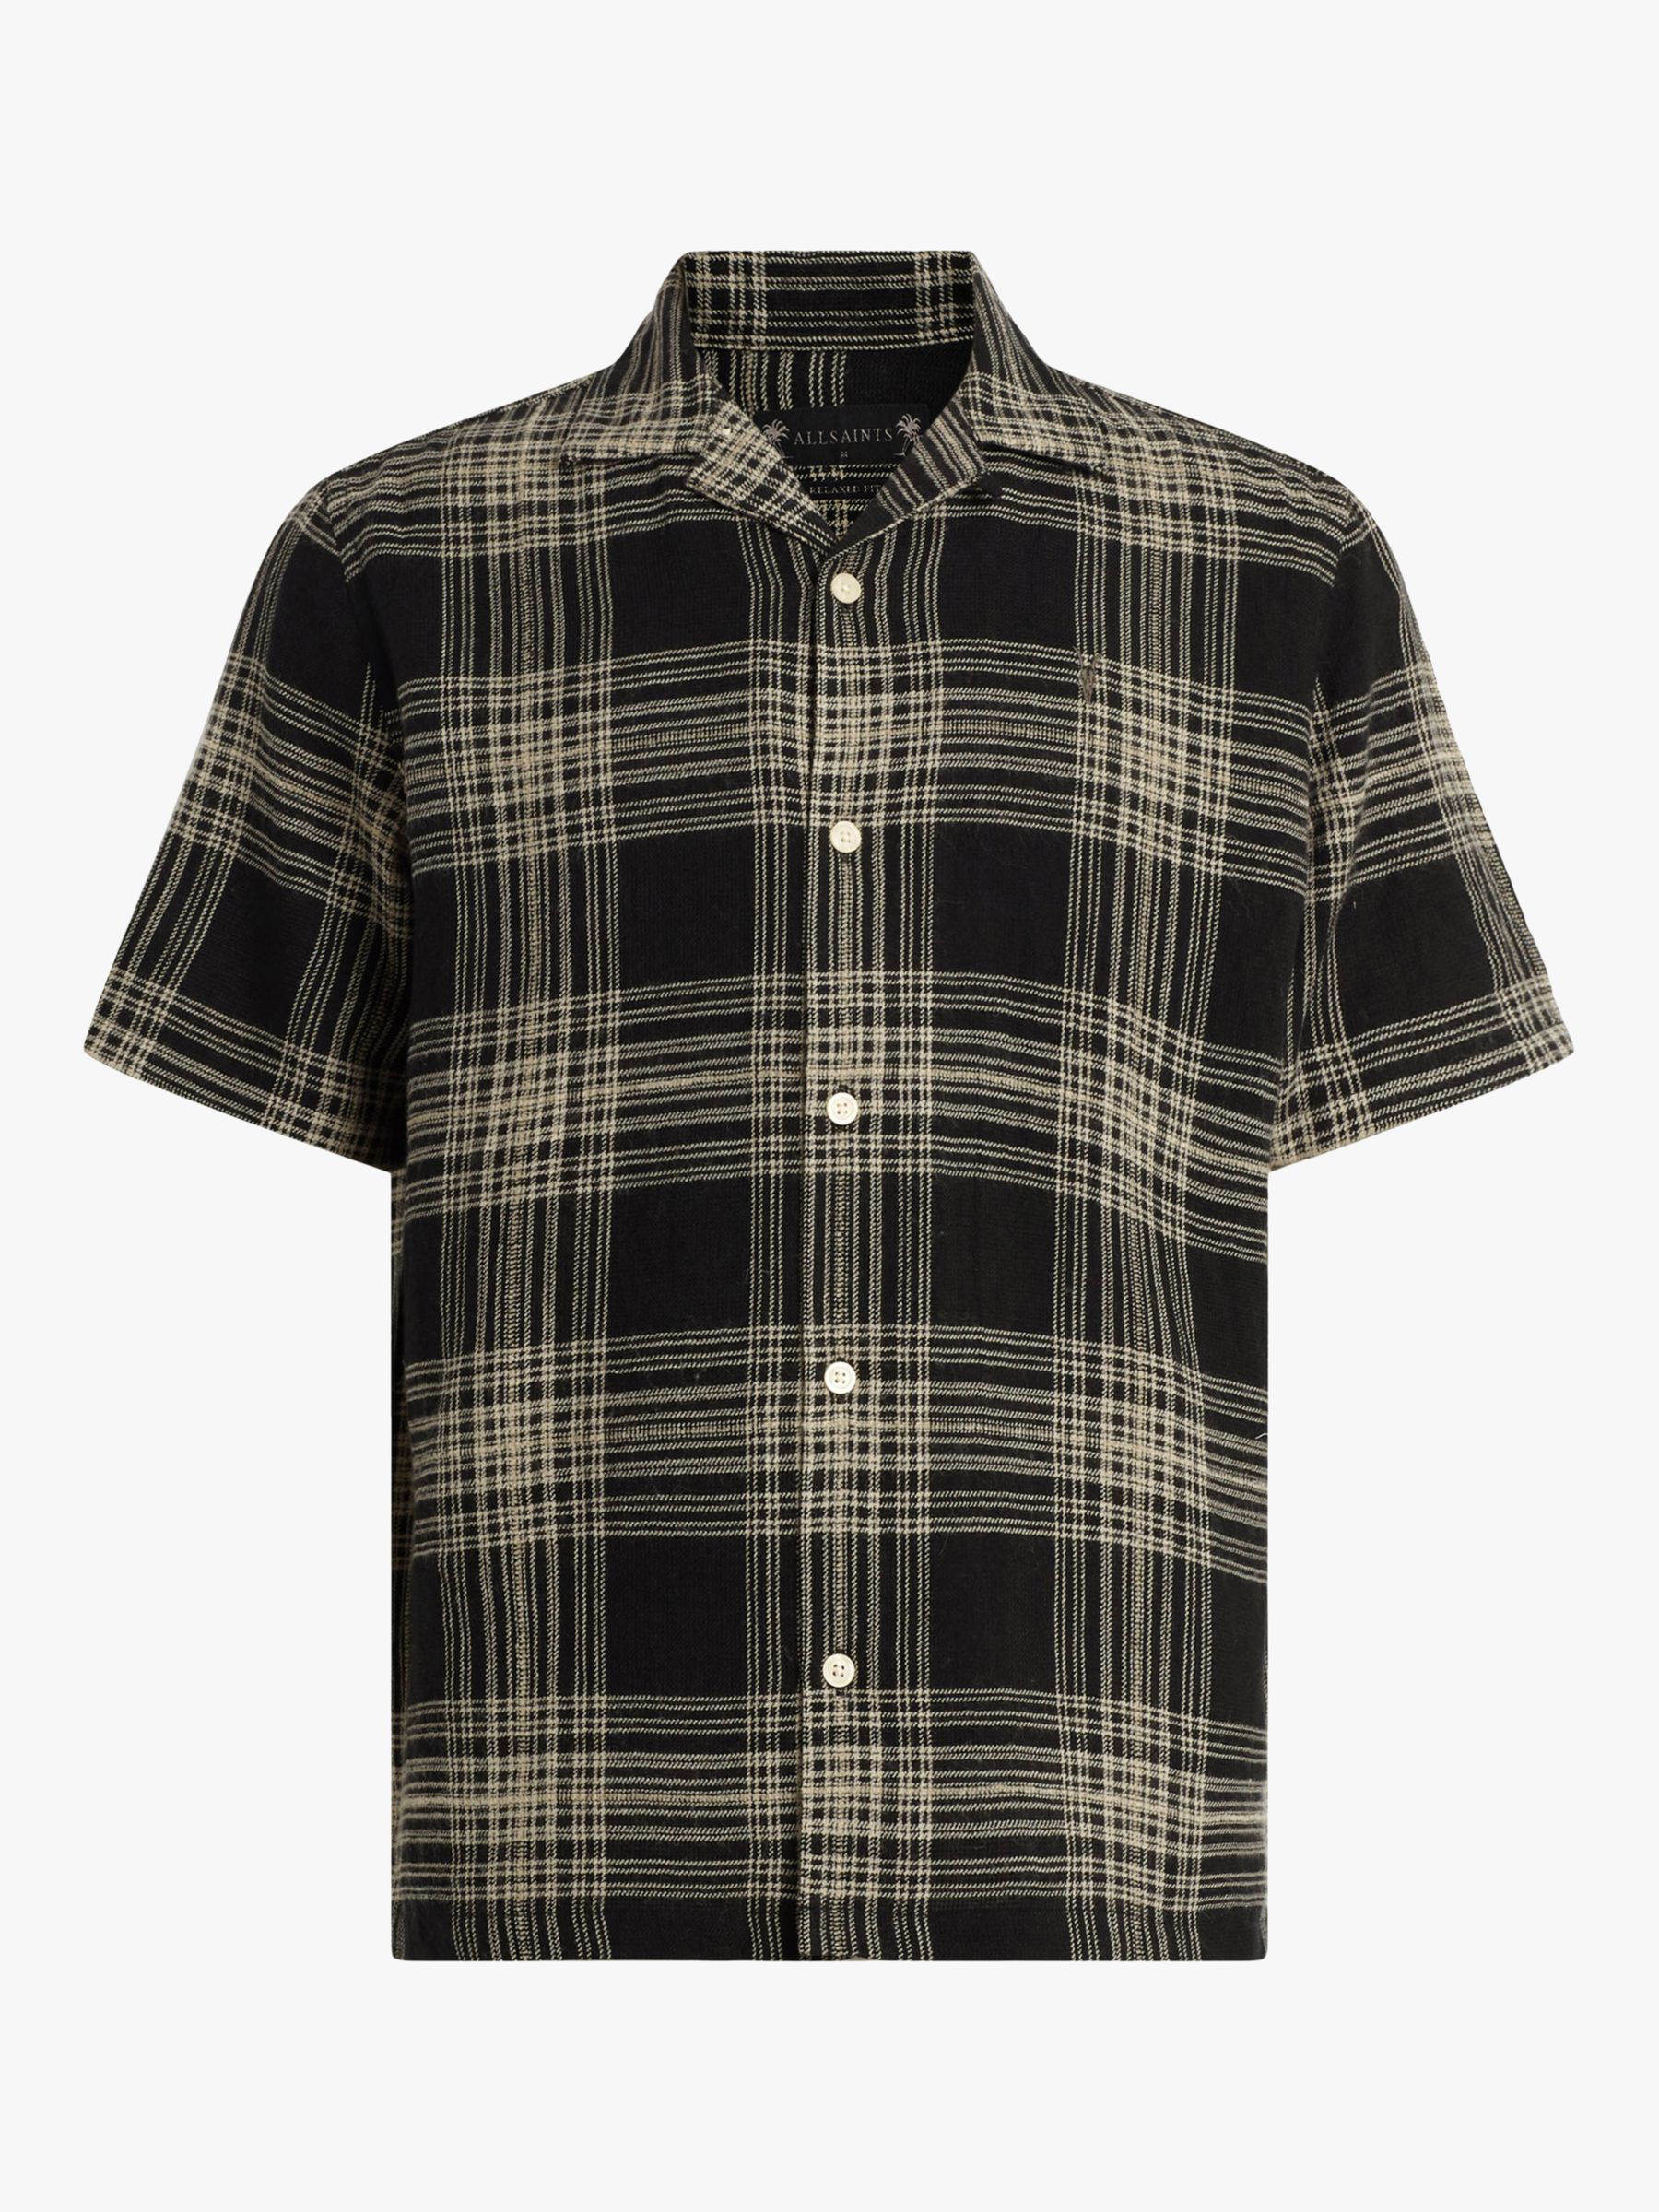 AllSaints Padres Short Sleeve Check Print Shirt, Jet Black, S